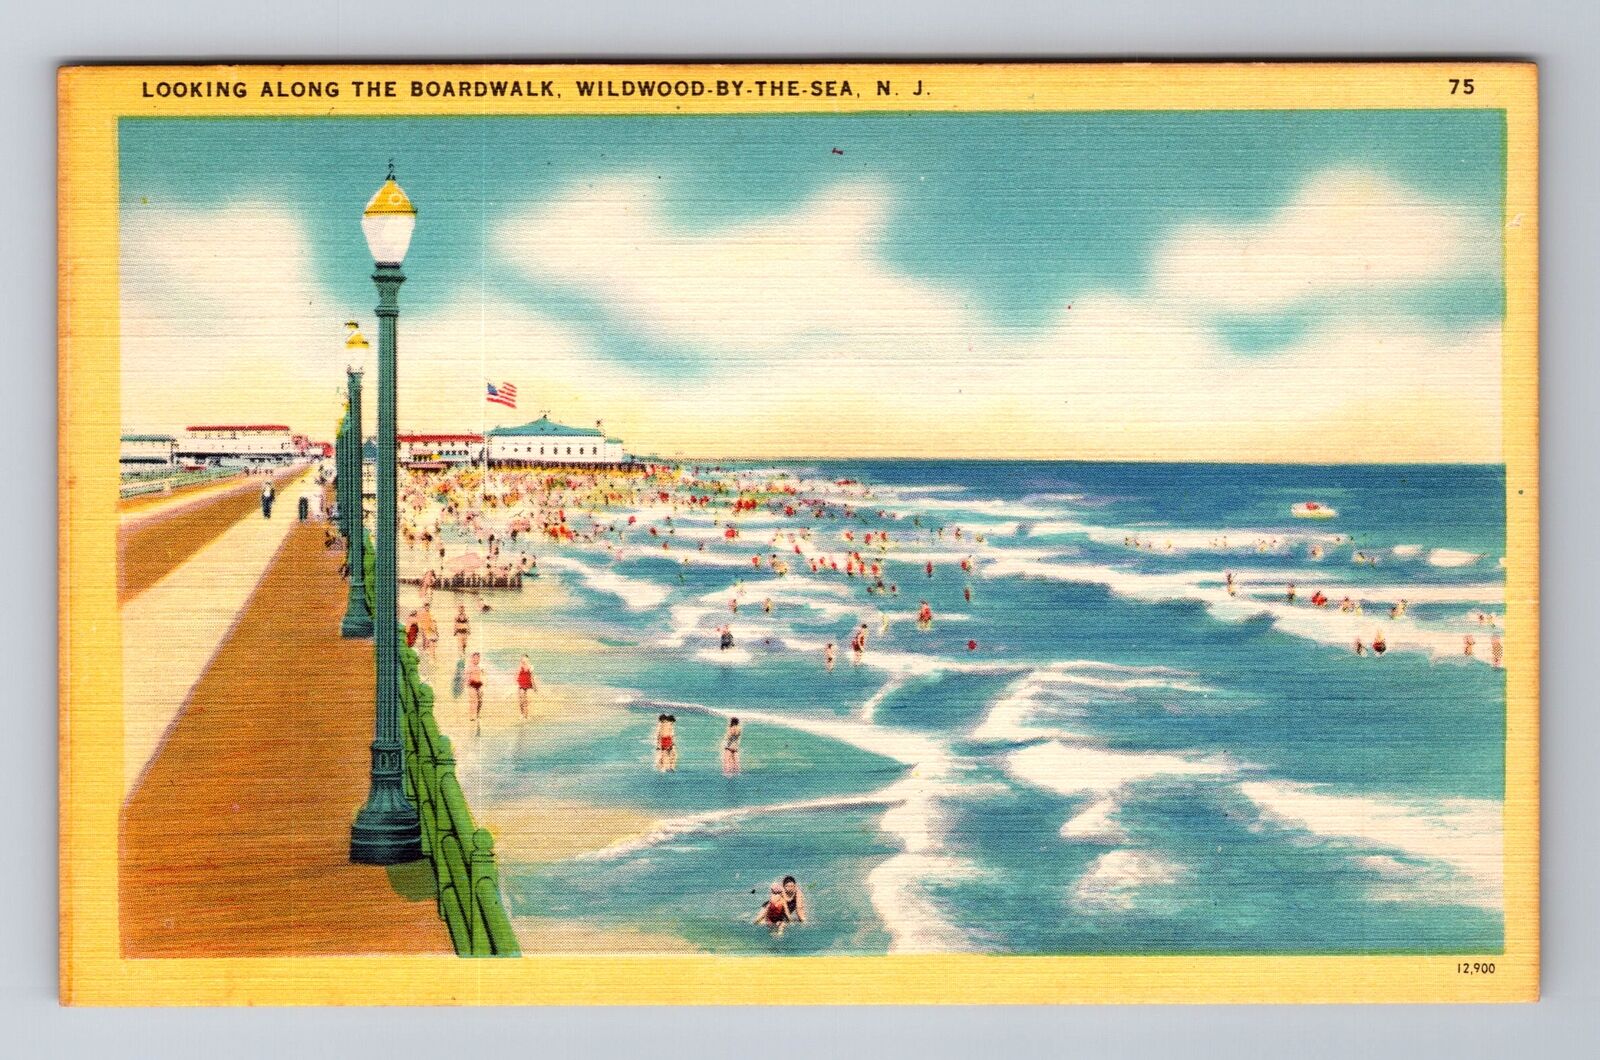 Wildwood-by-the-Sea NJ-New Jersey, Along the Boardwalk & Beach, Vintage Postcard